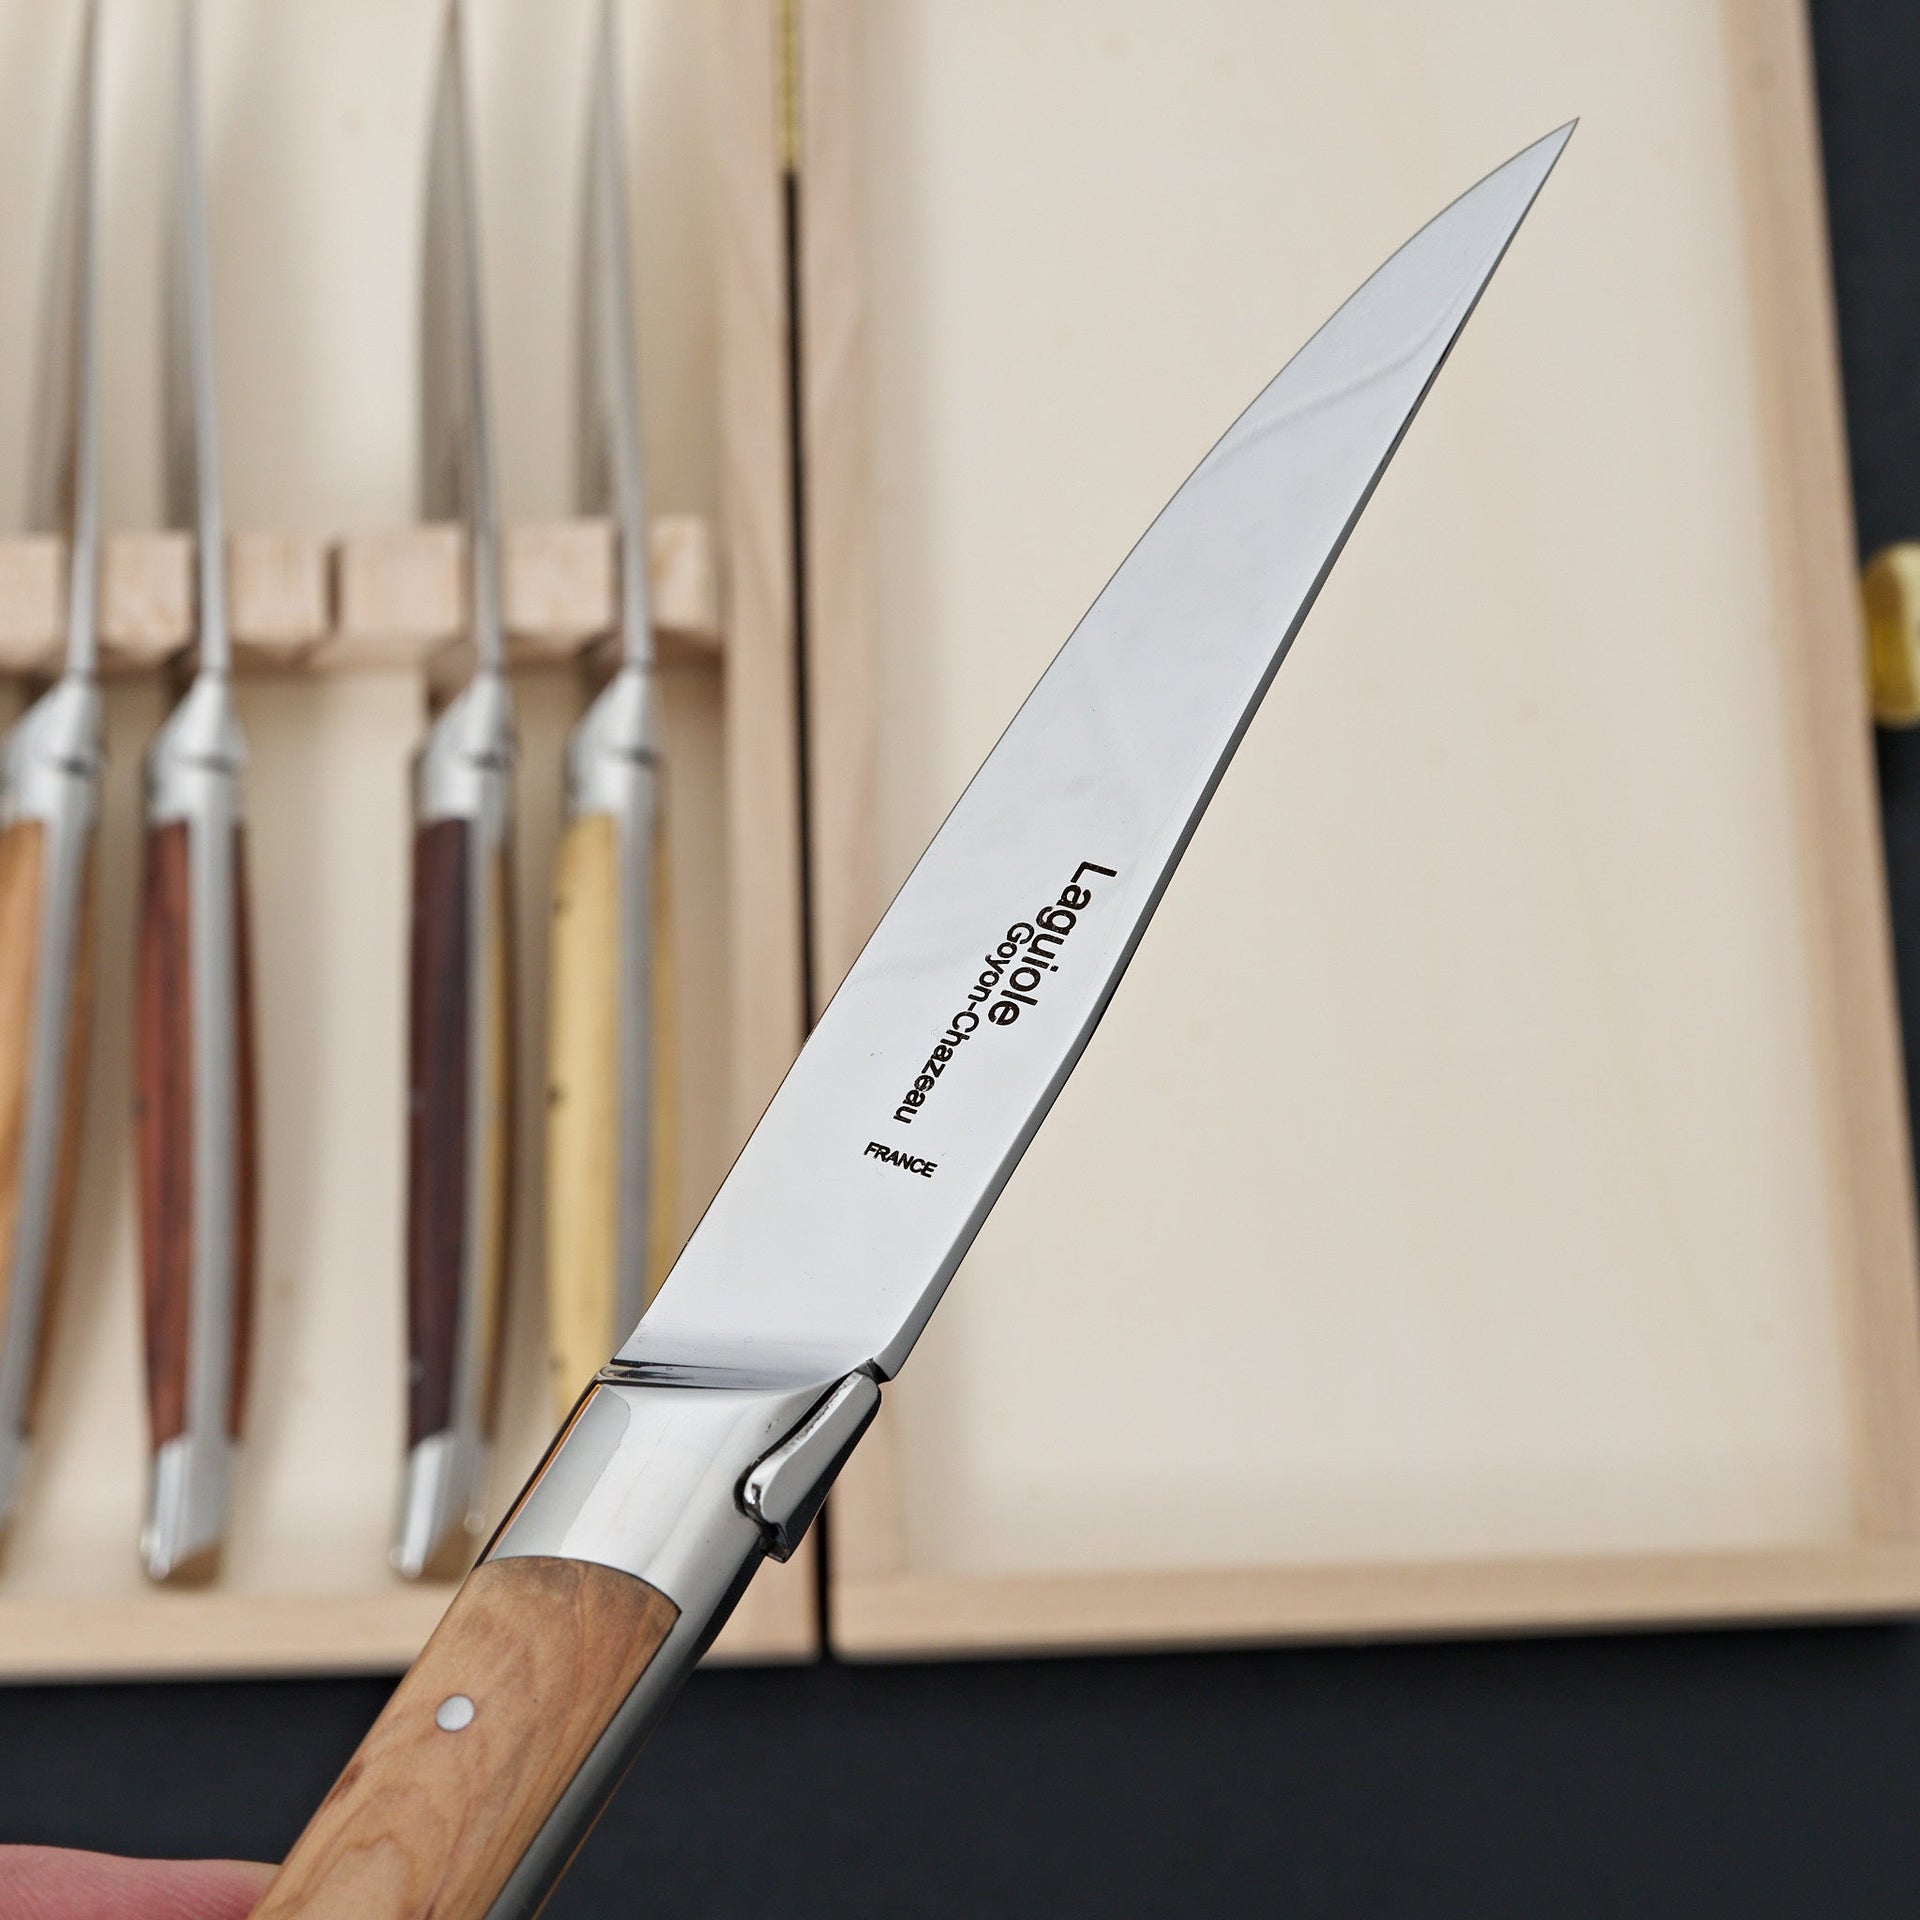 Laguoile Modern 6 Piece Table Knife Set-Knife-K Sabatier-Carbon Knife Co